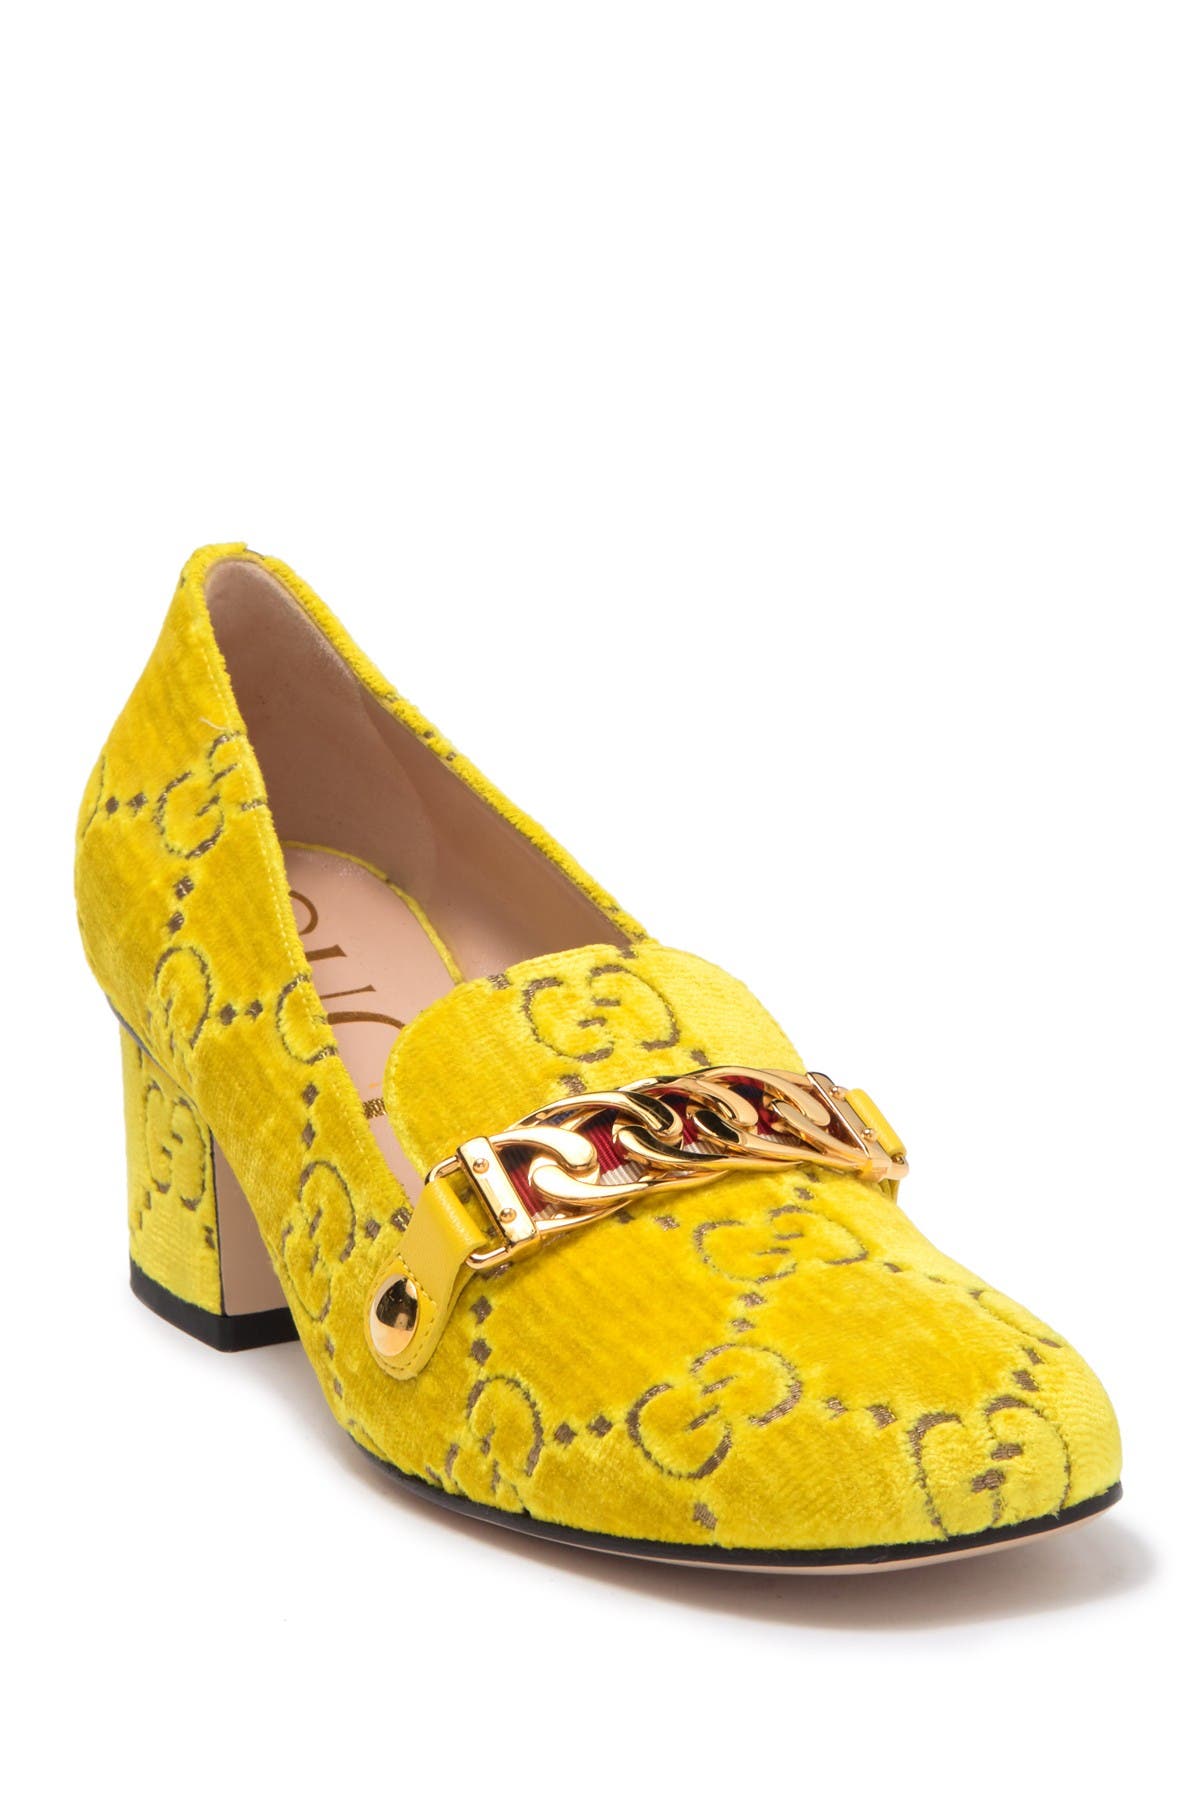 gucci yellow heels